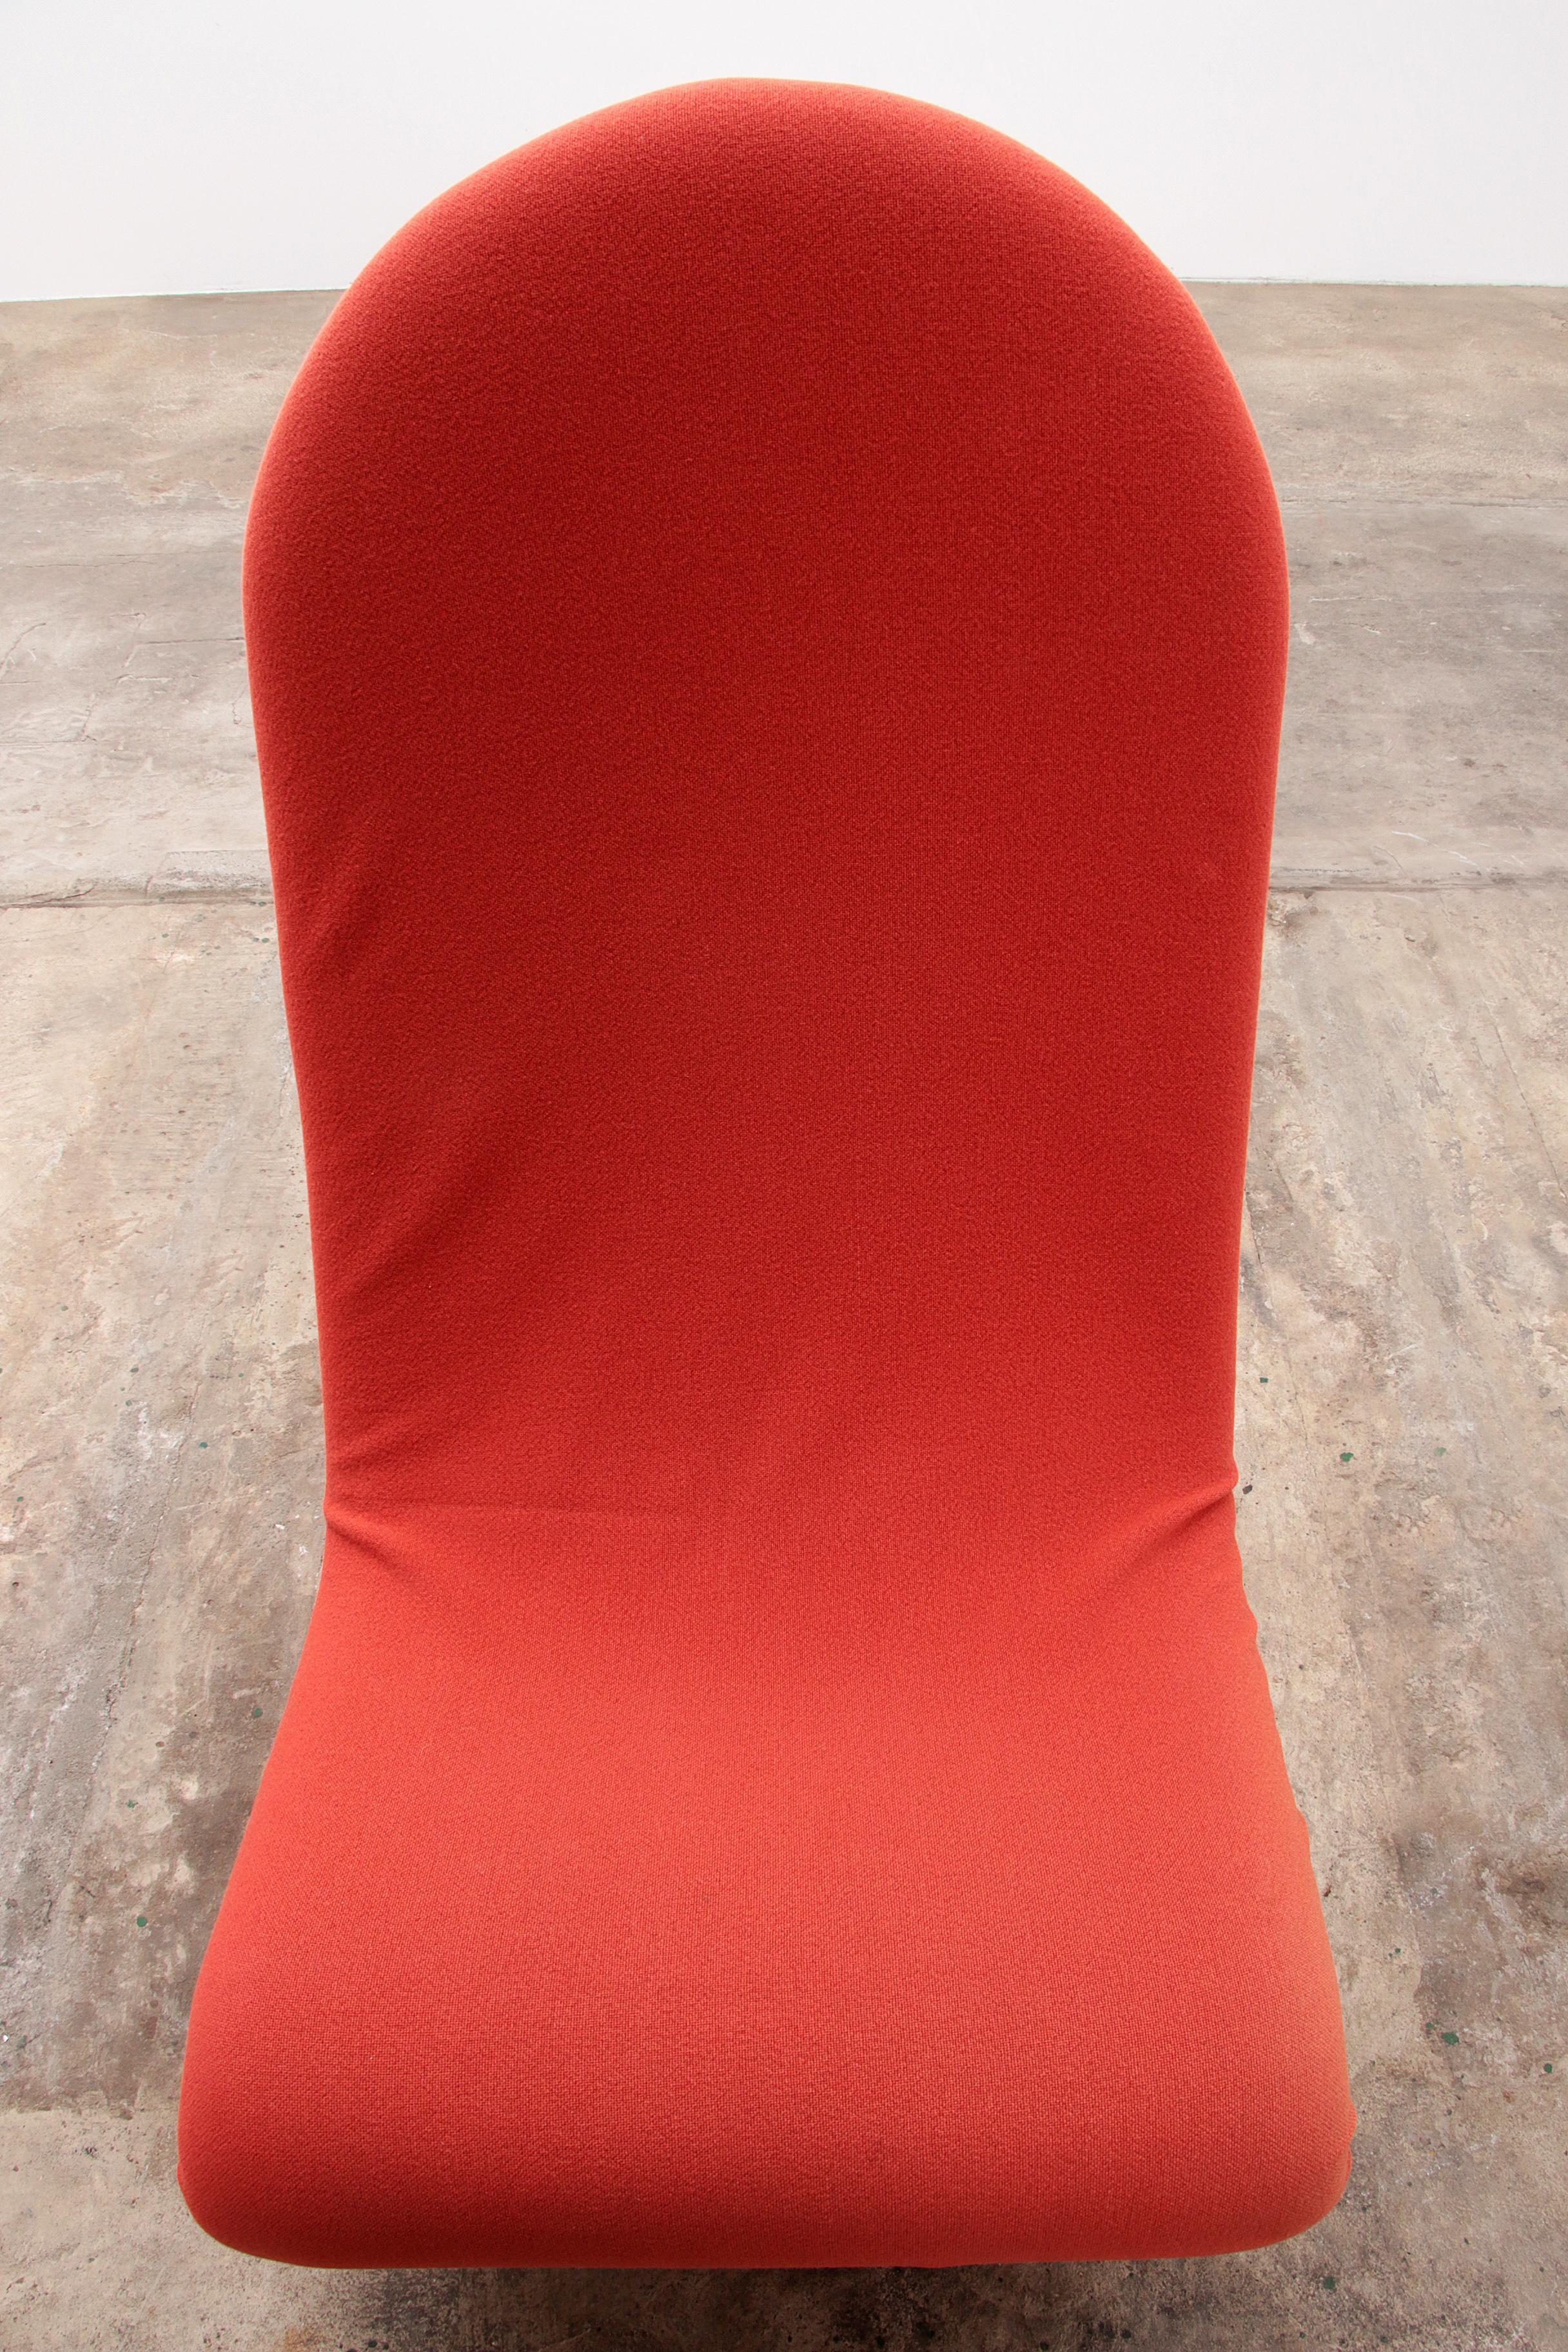 Verner Panton 1-2-3 Chair with High Backrest - Red/Orange, 1973 For Sale 5